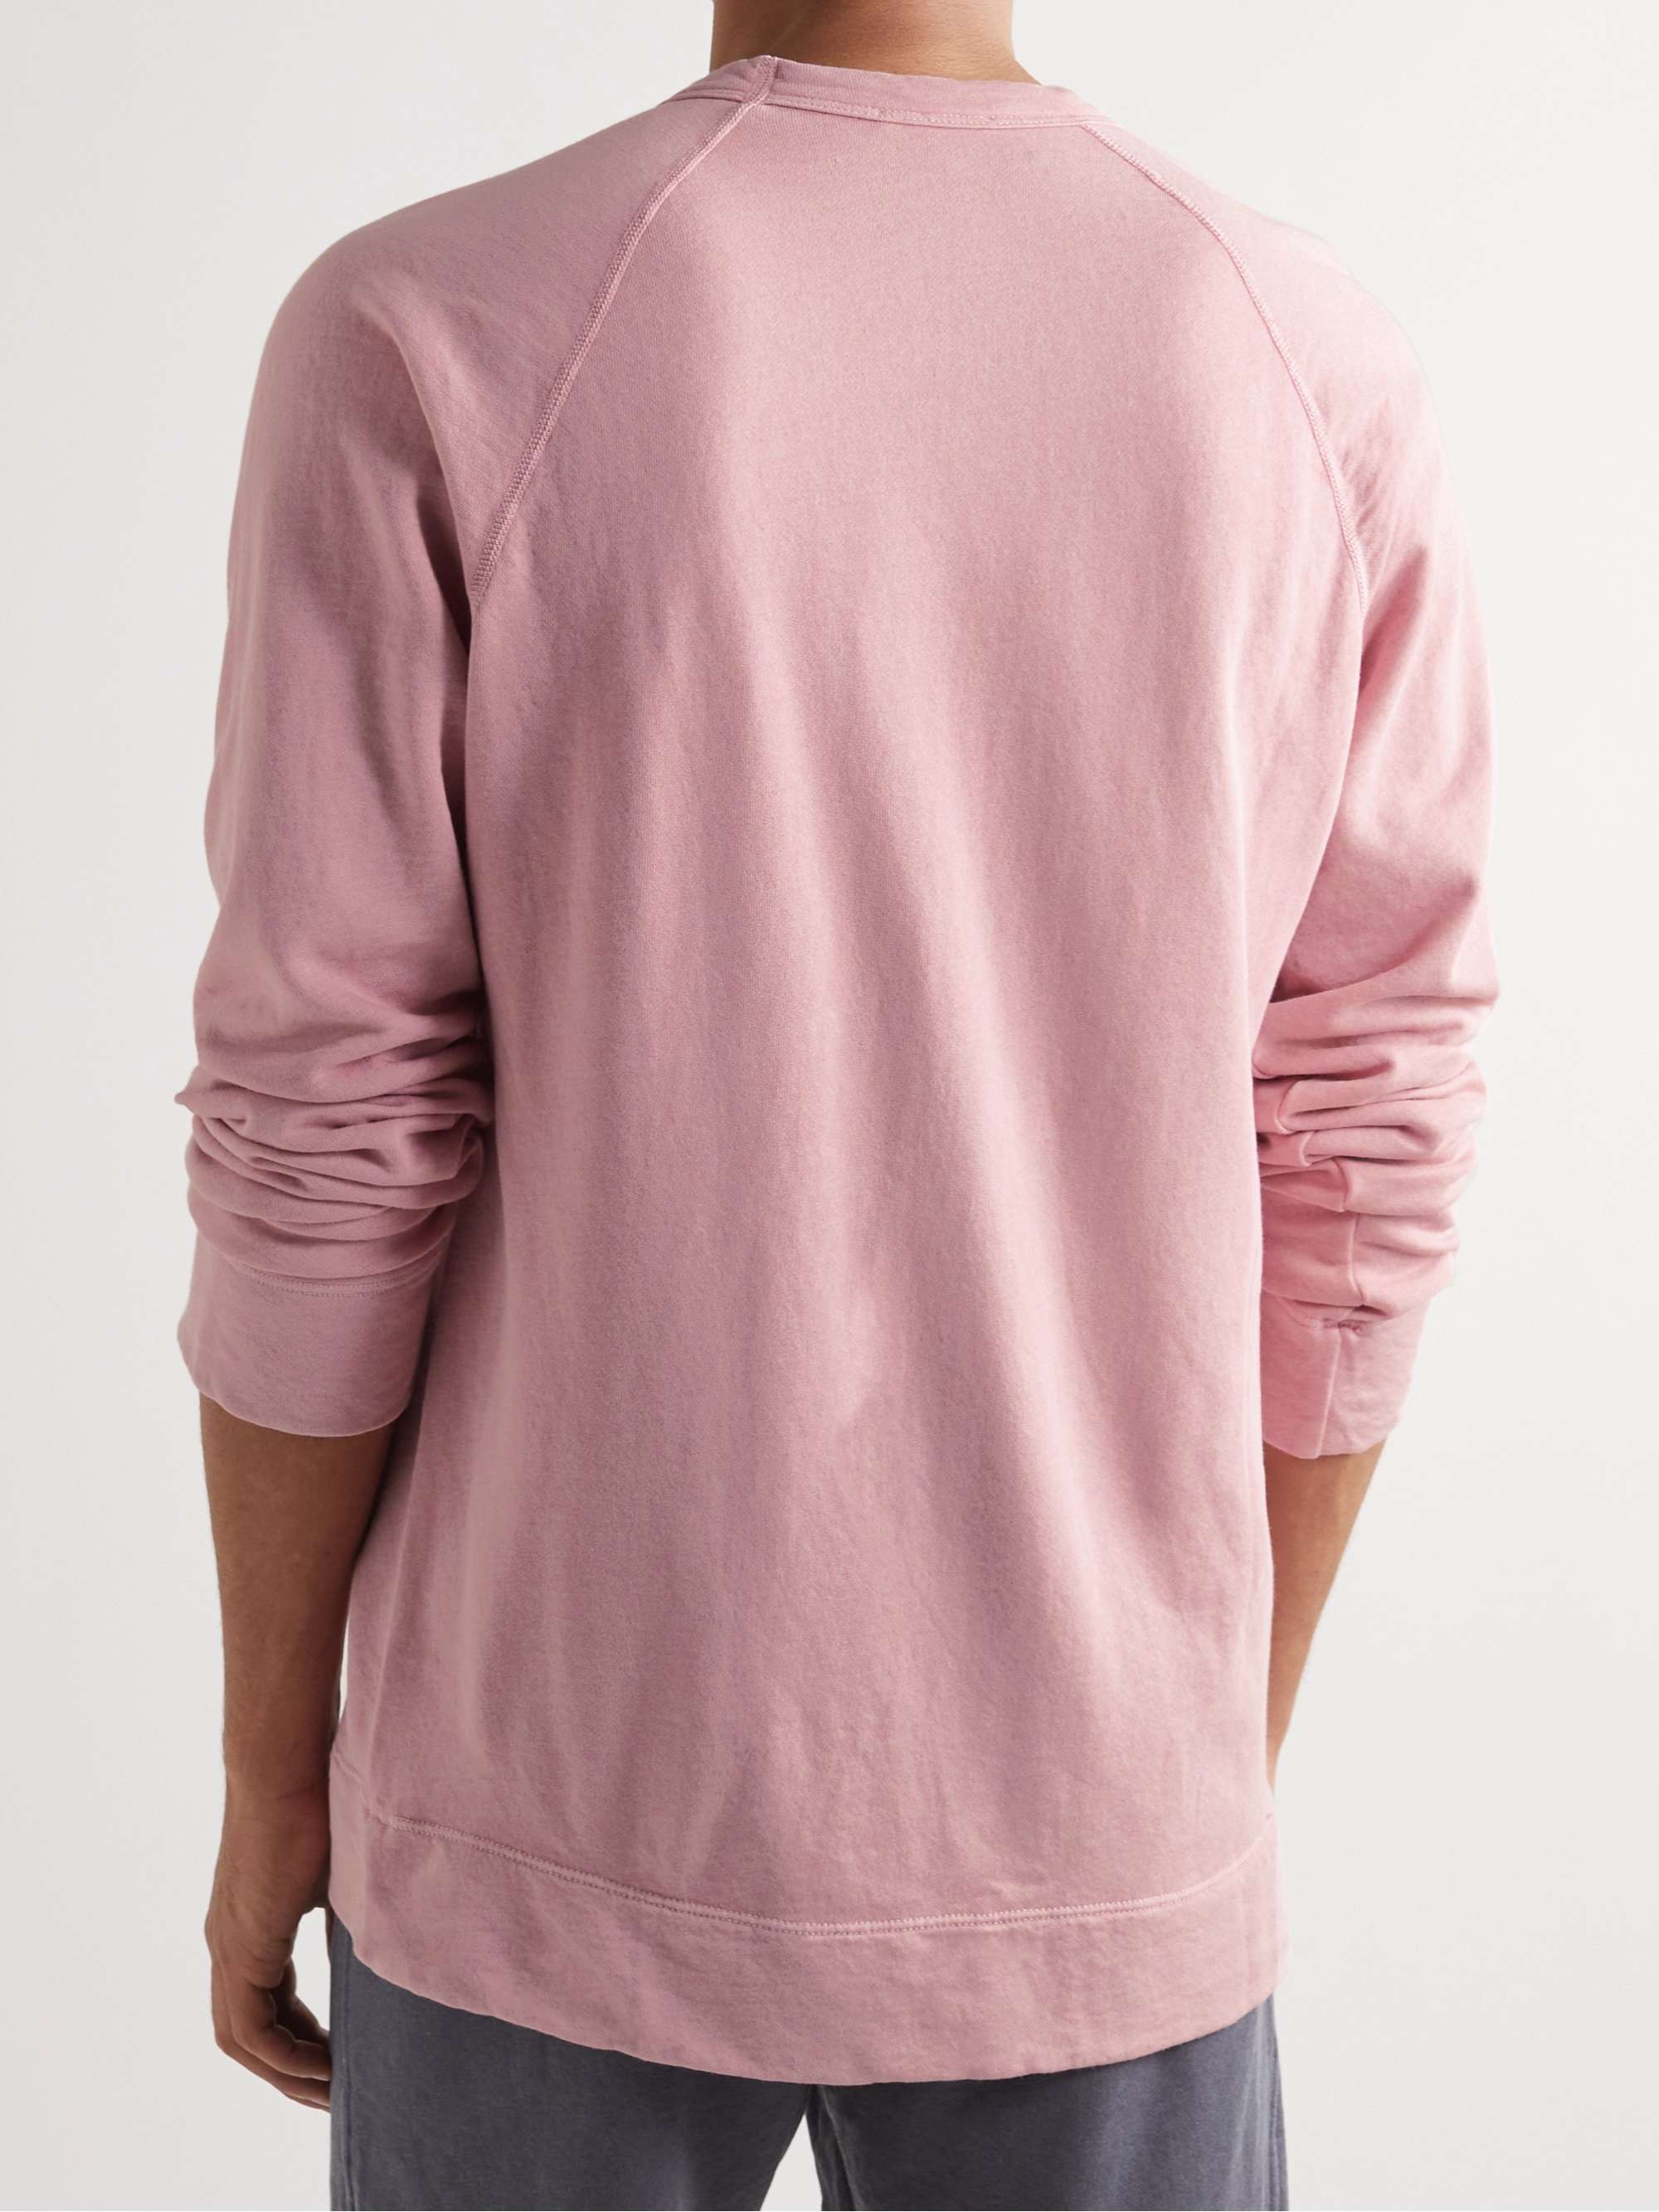 JAMES PERSE Loopback Supima Cotton-Jersey Sweatshirt